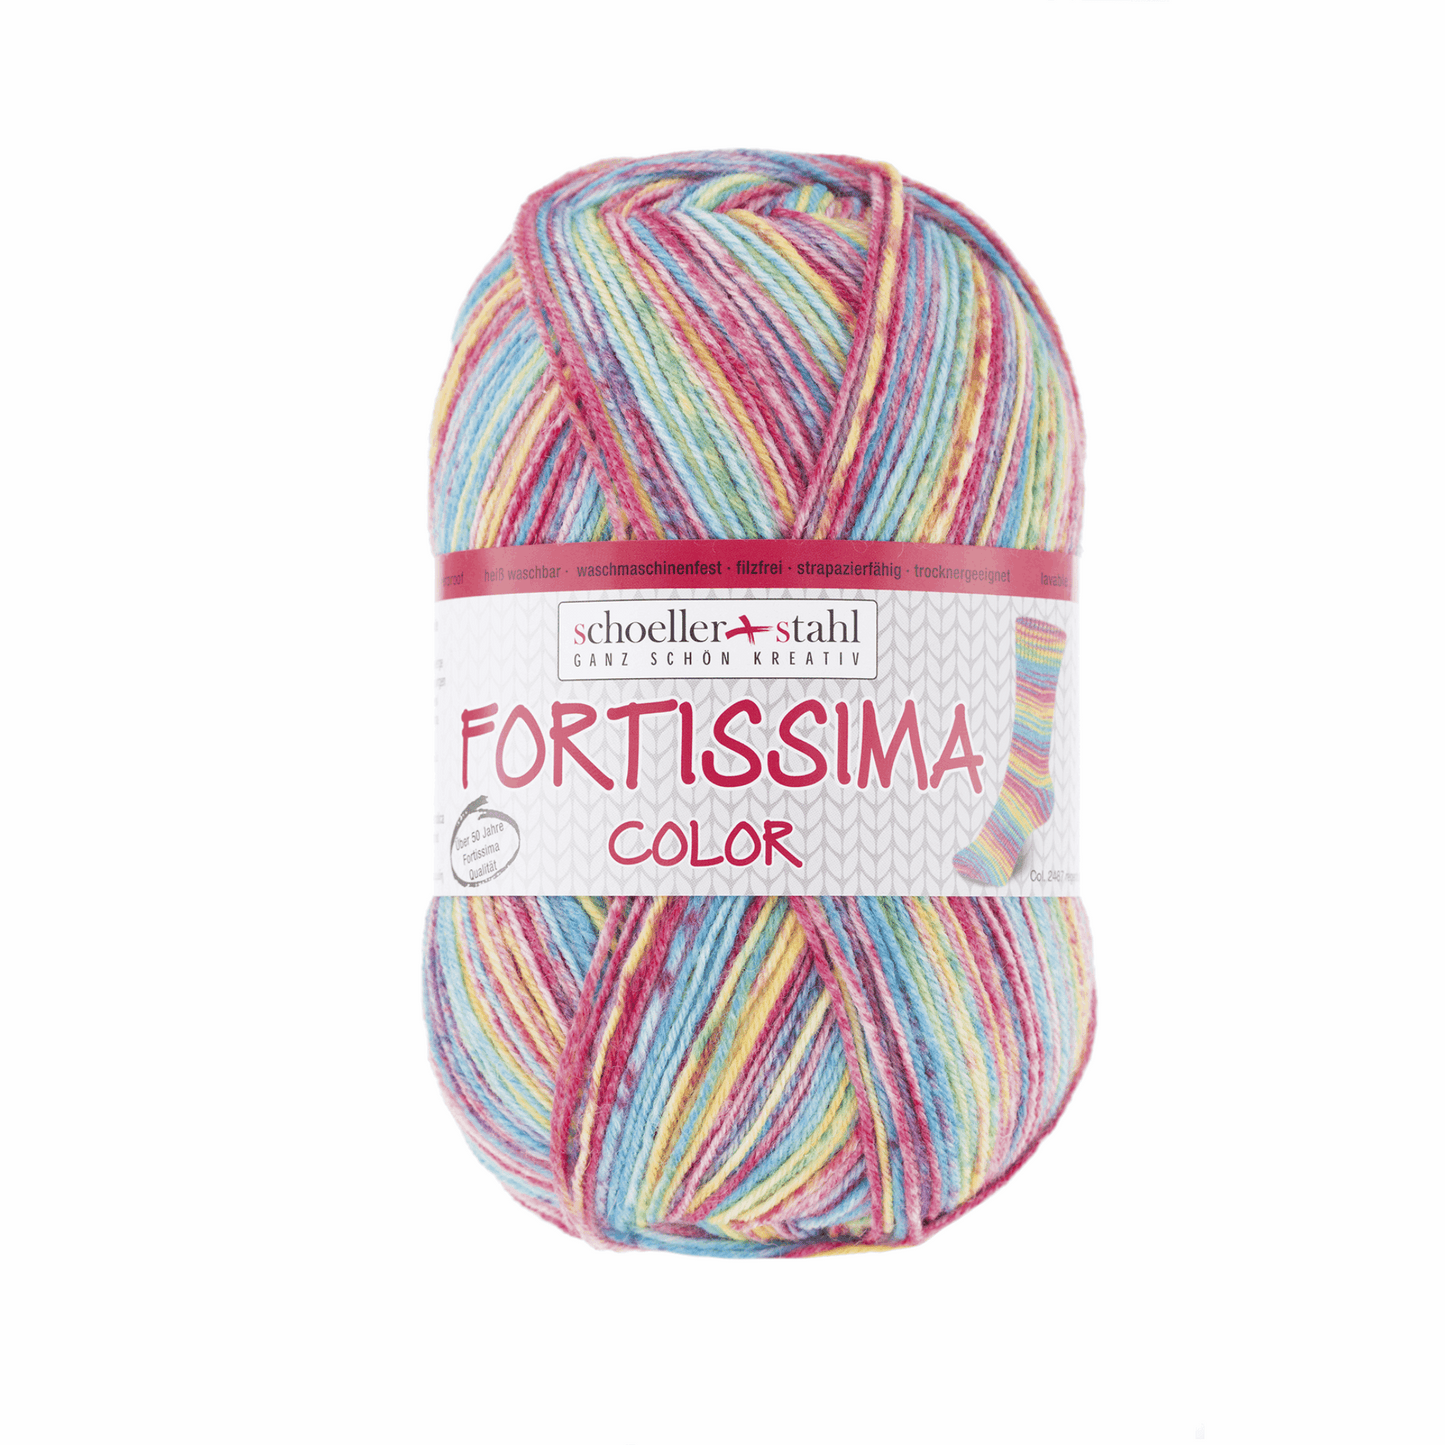 Fortissima socka 4-ply, 90028, color 2487, rainbow